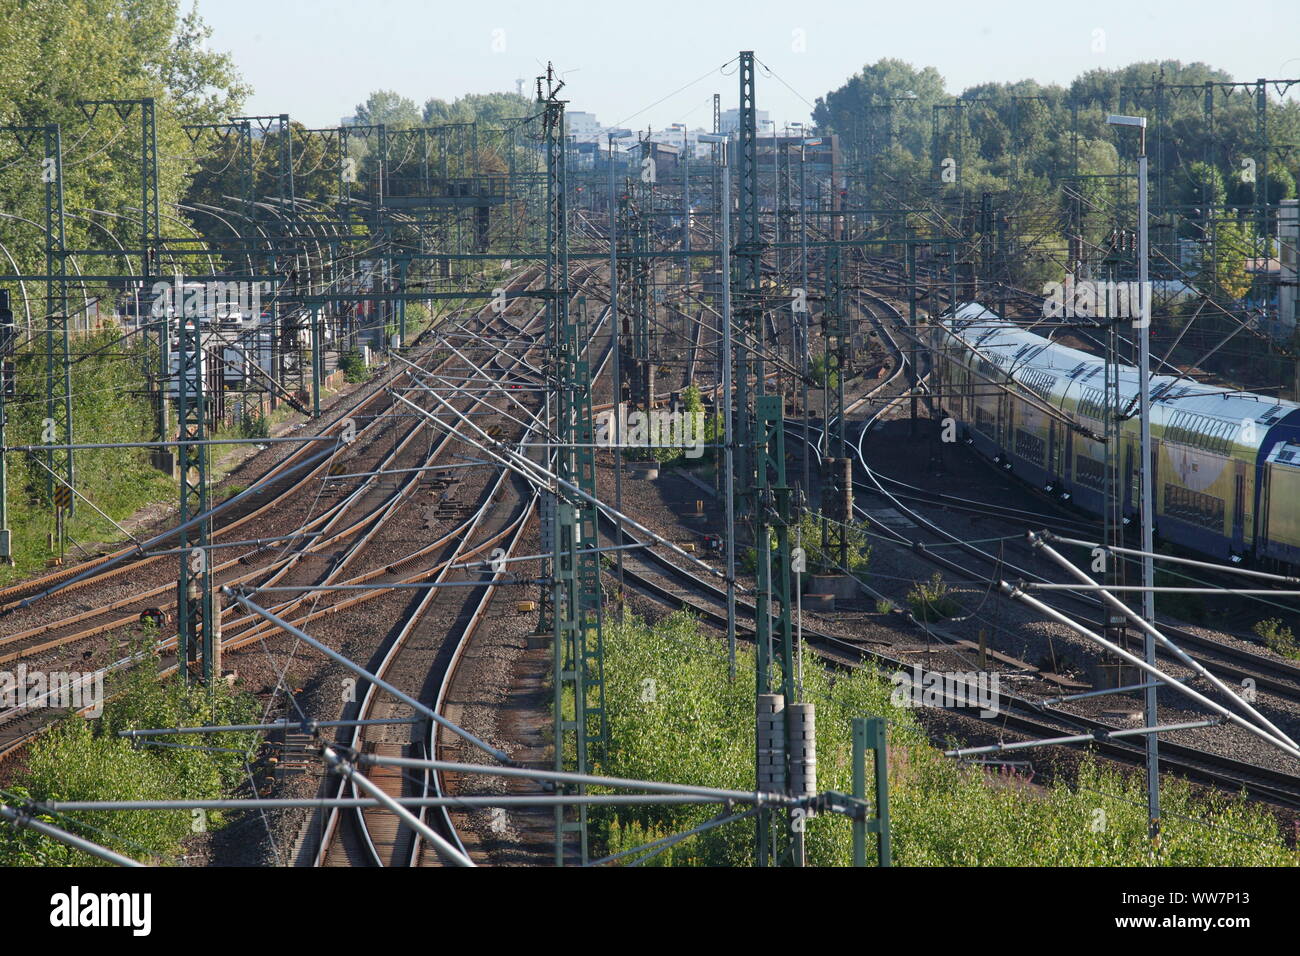 Railway system with rails and commuter train, Harburg, Hamburg, Germany, Europe Stock Photo